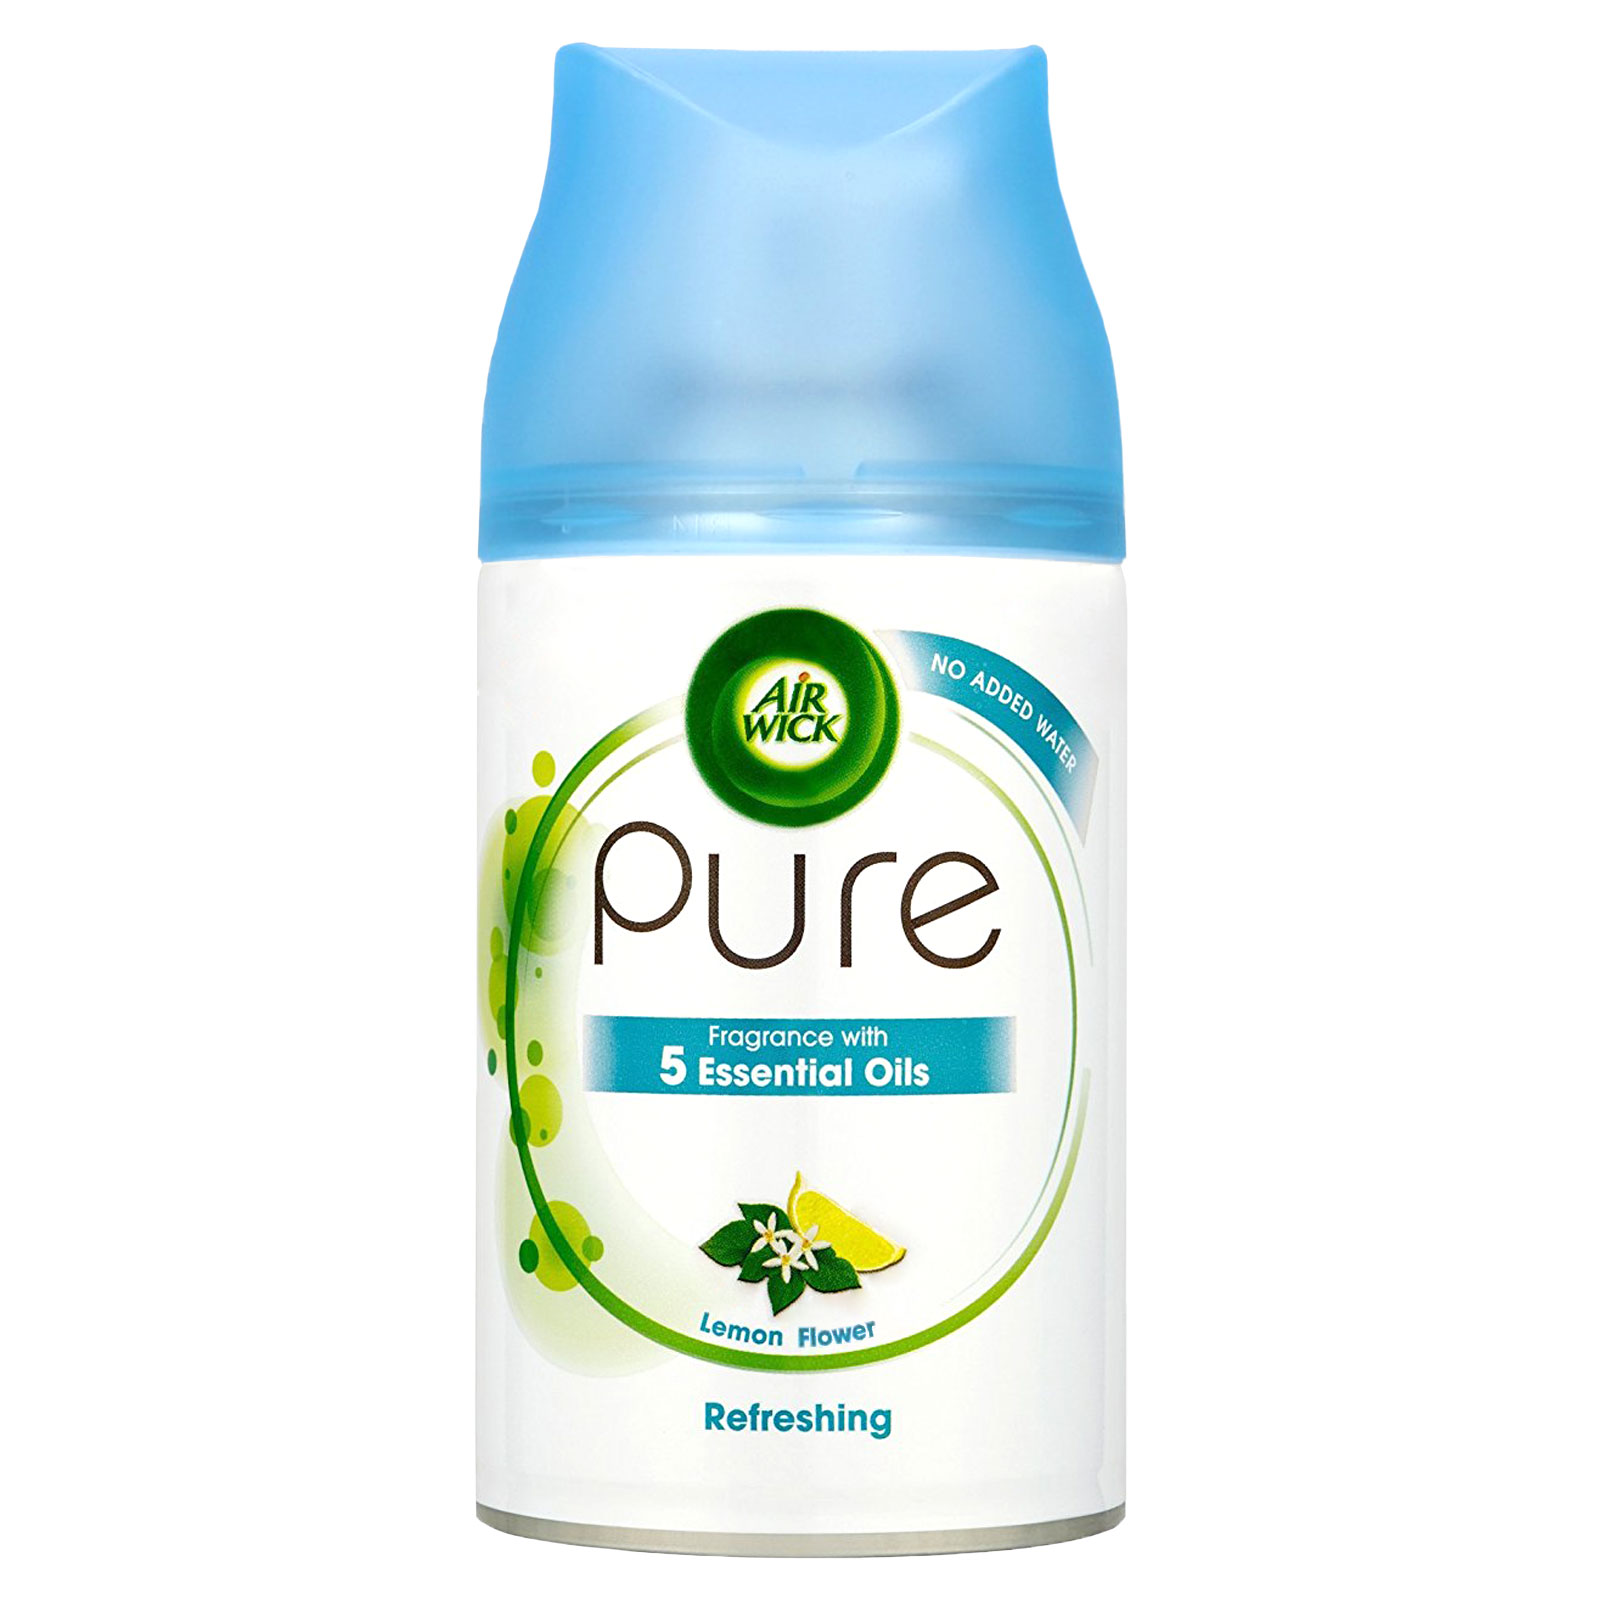 Air Wick Pure Refreshing Lemon Flower Refill 250ml Air Freshener Essential Oils